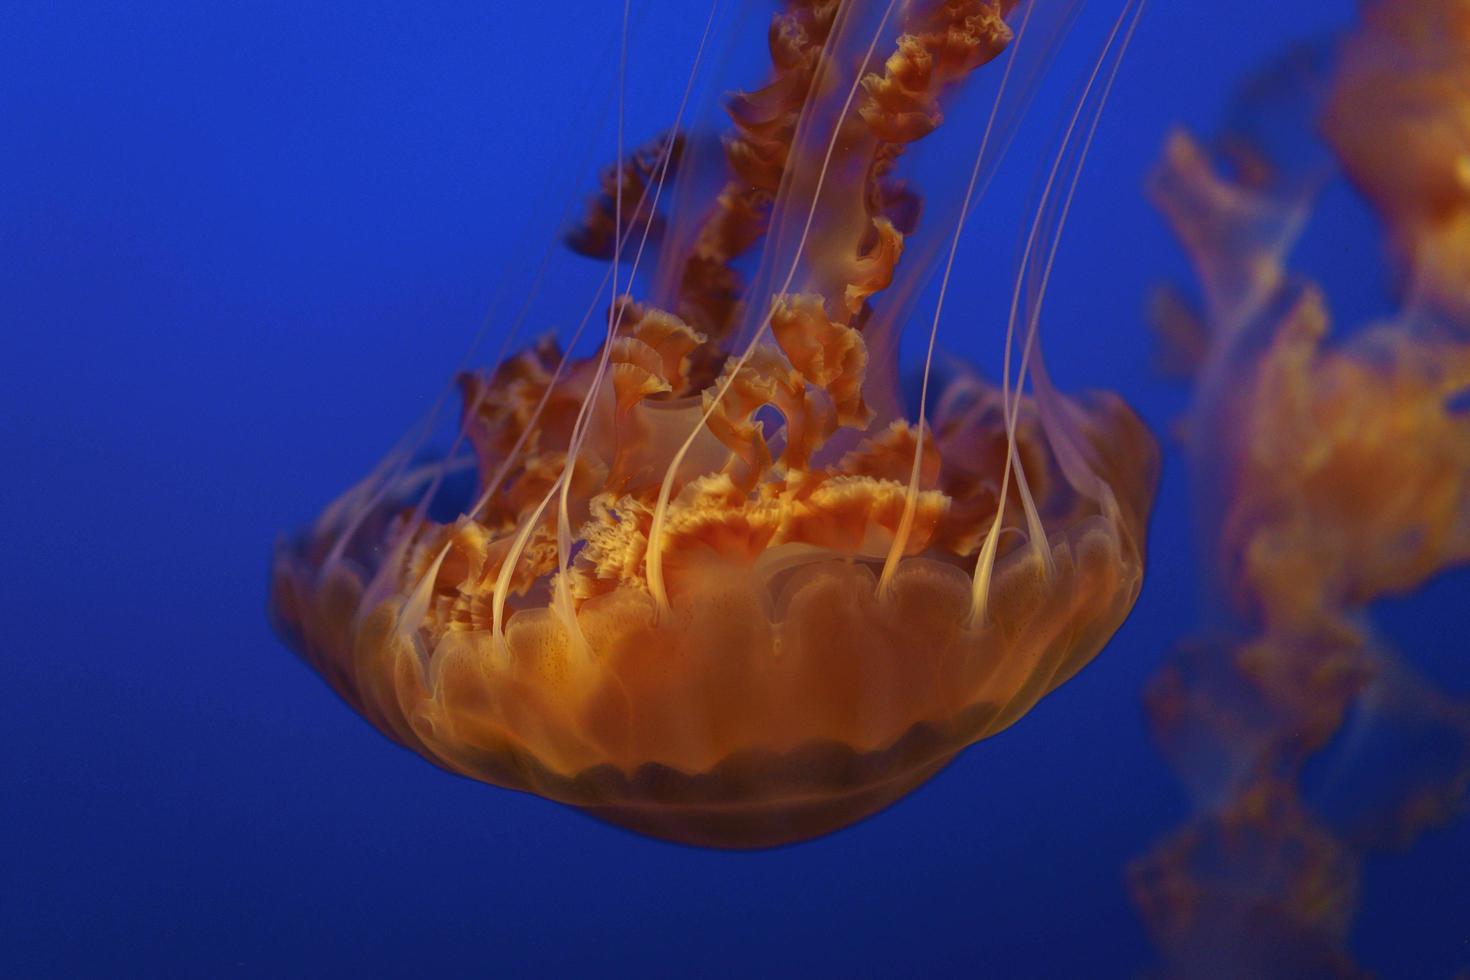 meduse sott'acqua foto